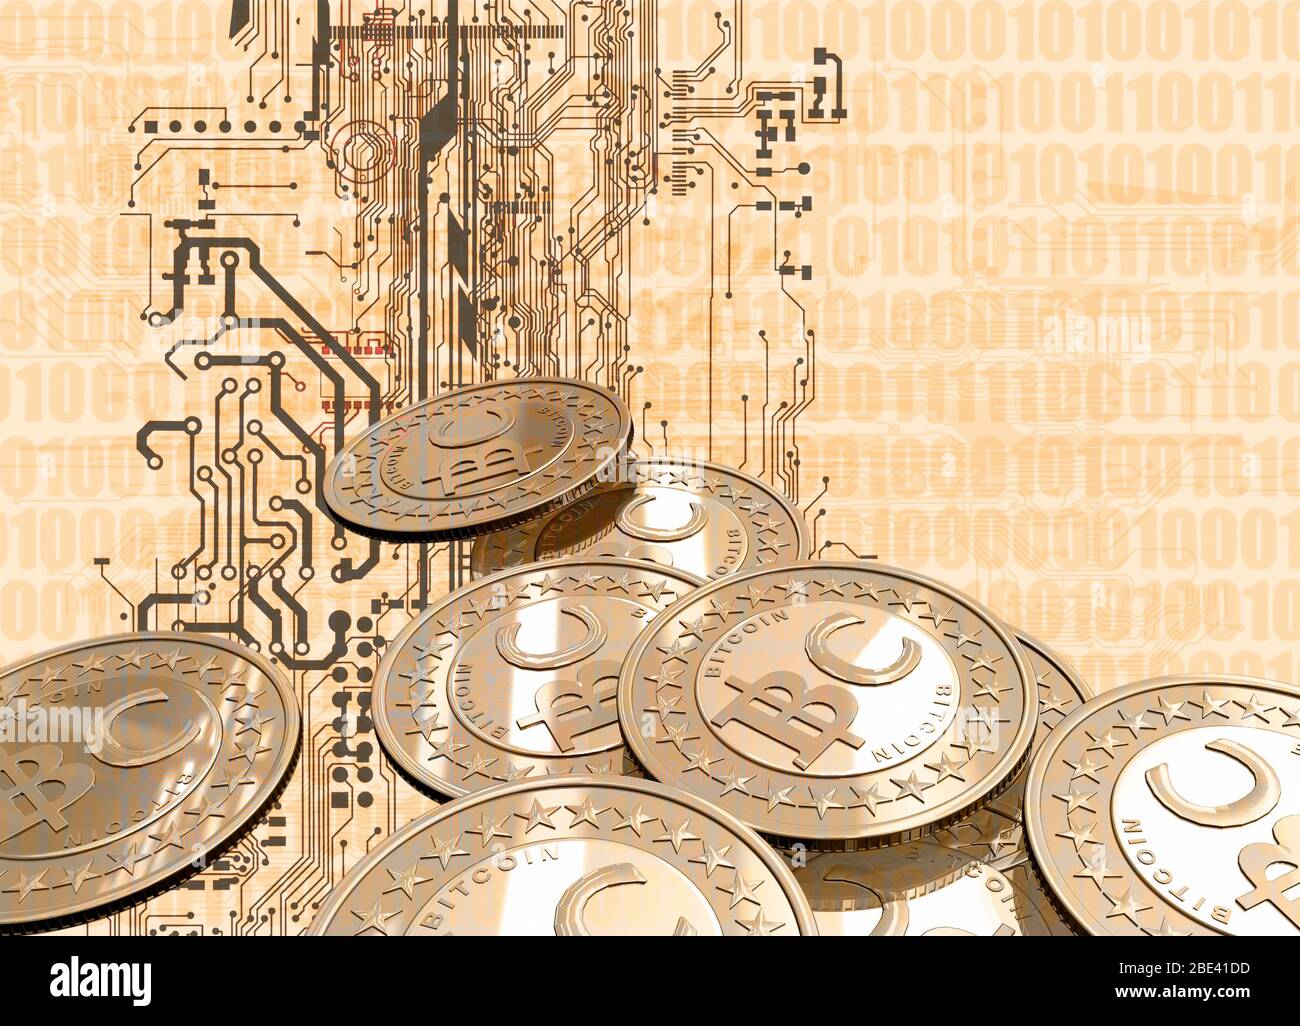 Bitcoins and circuit board, illustration. Stock Photo